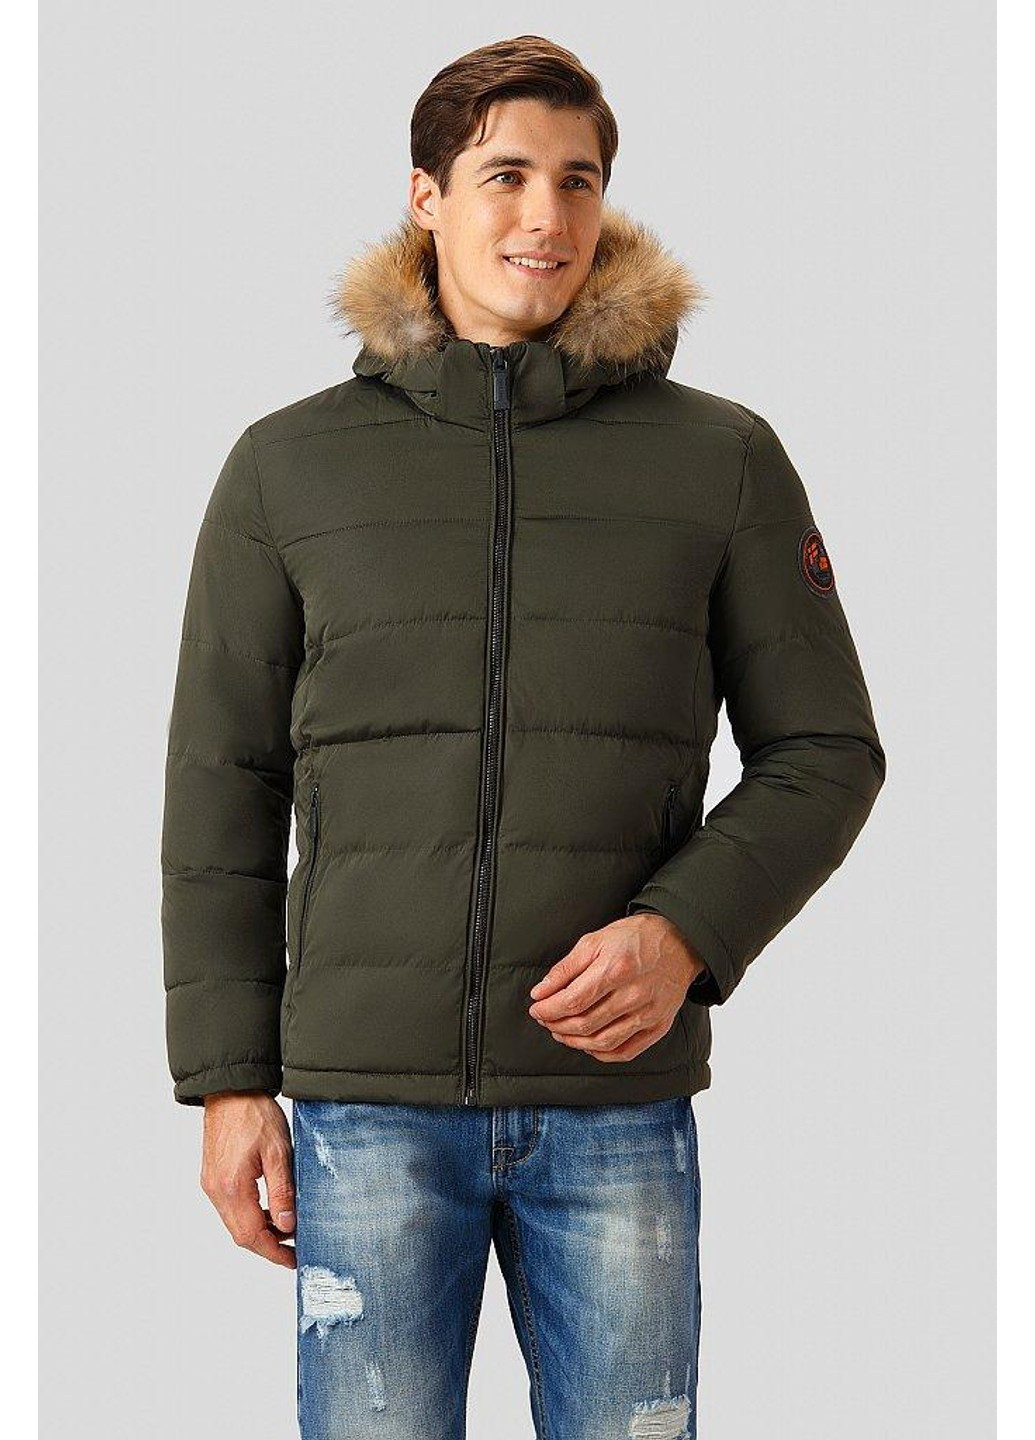 Зеленая зимняя зимняя куртка w18-22011-507 Finn Flare